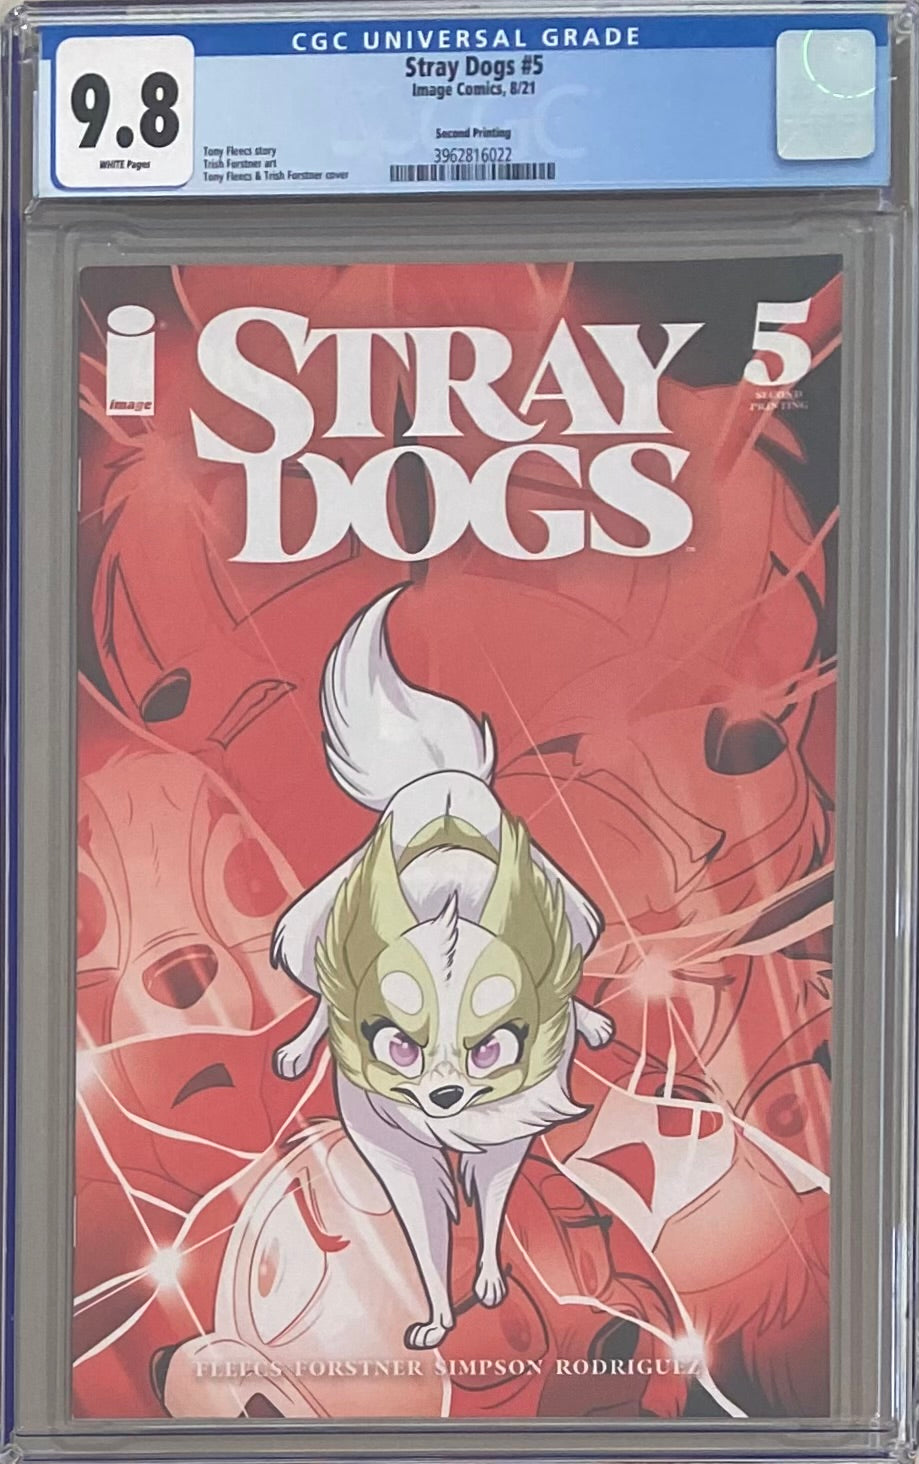 Stray Dogs #5 Second Printing CGC 9.8